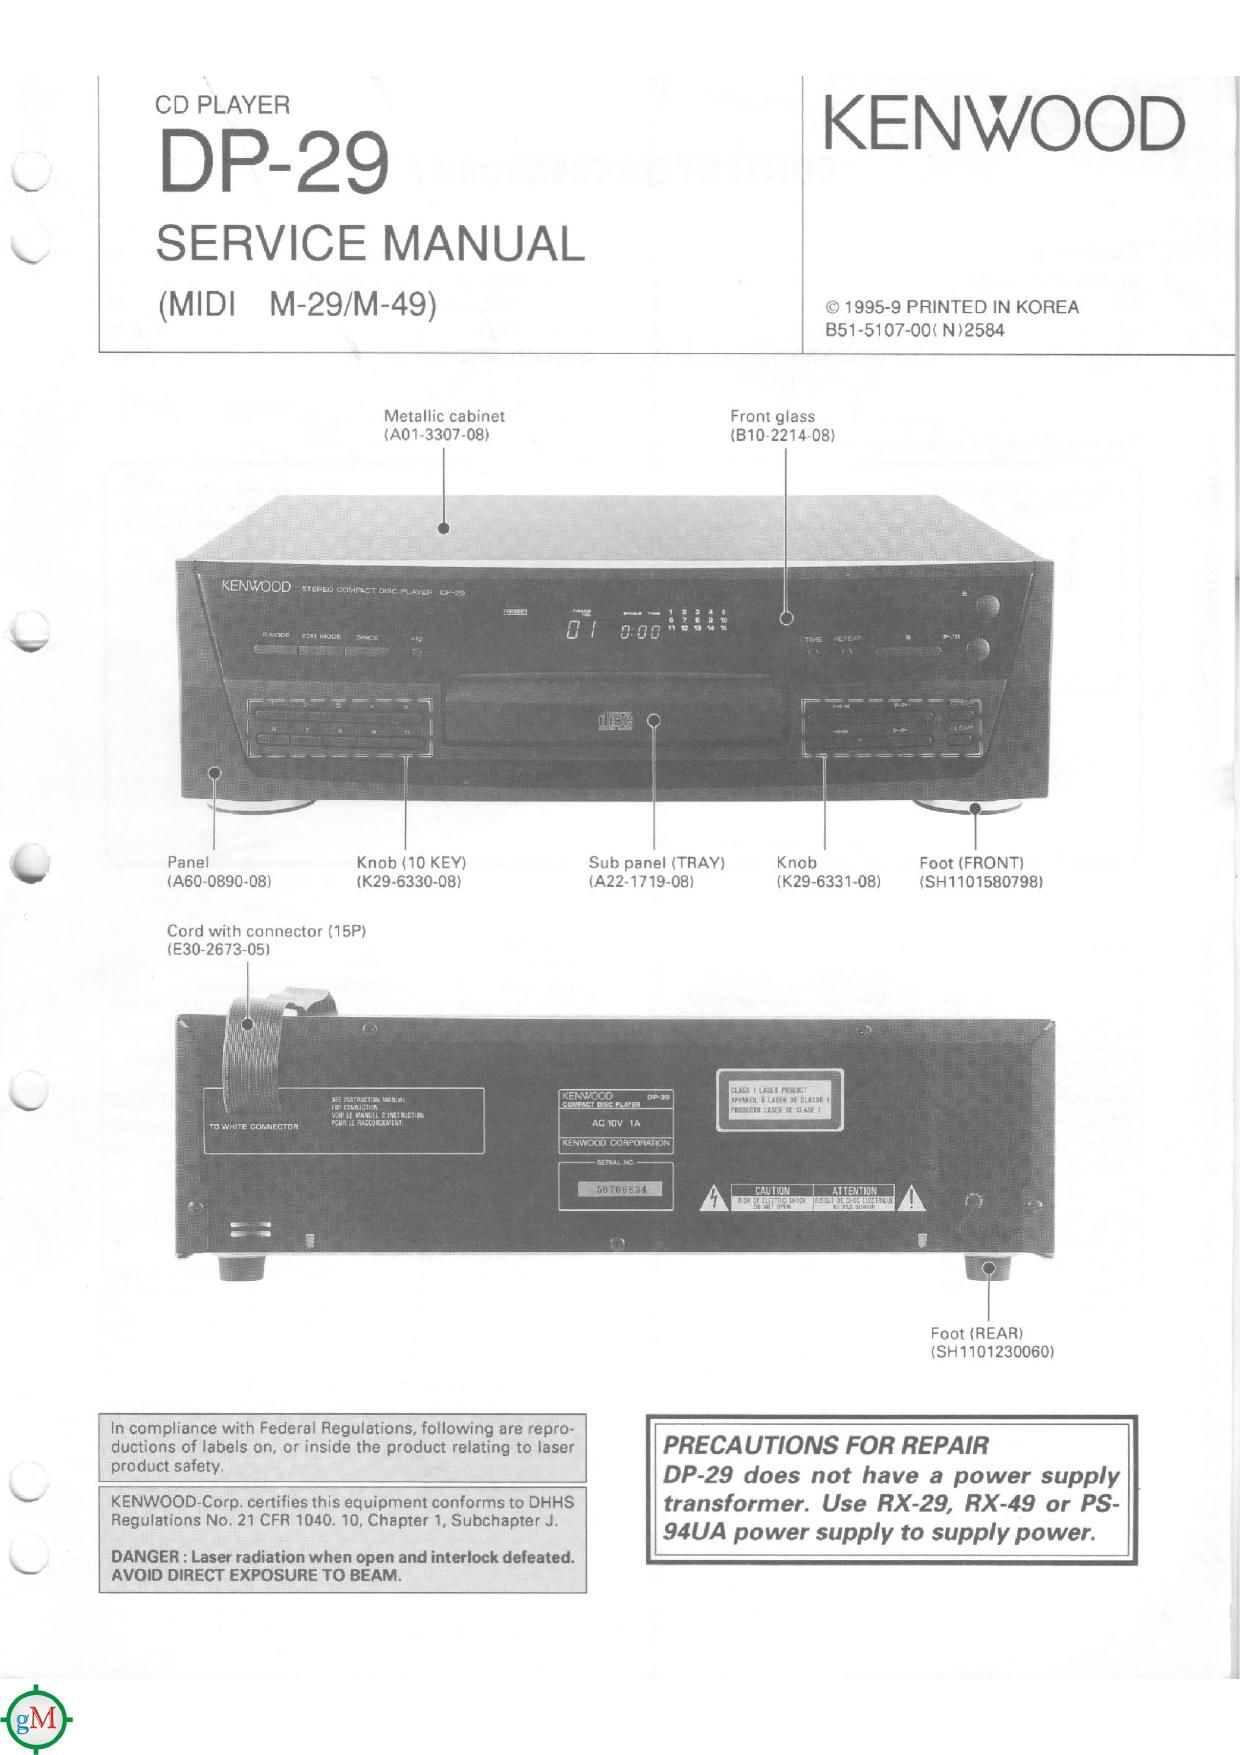 Kenwood DP 29 MIDI Service Manual